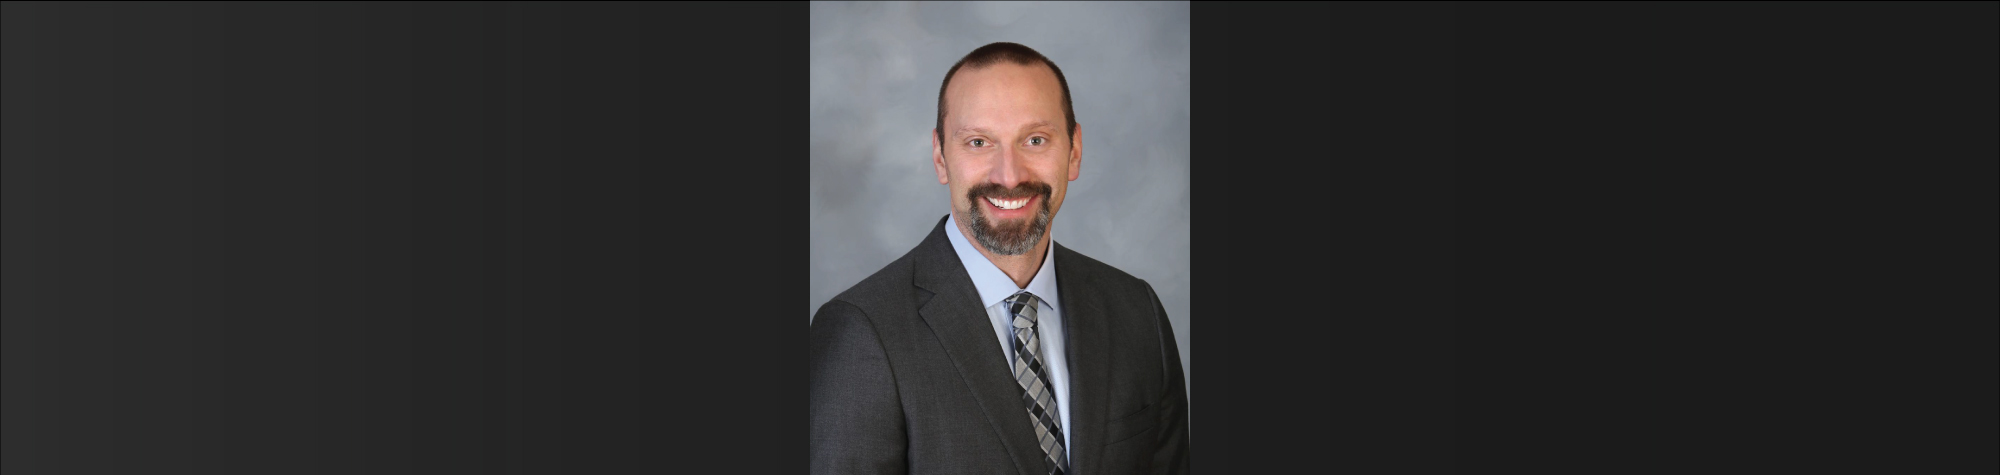 Kevin Lasante Named Regional Vice President of Merchants’ New England Regional Office